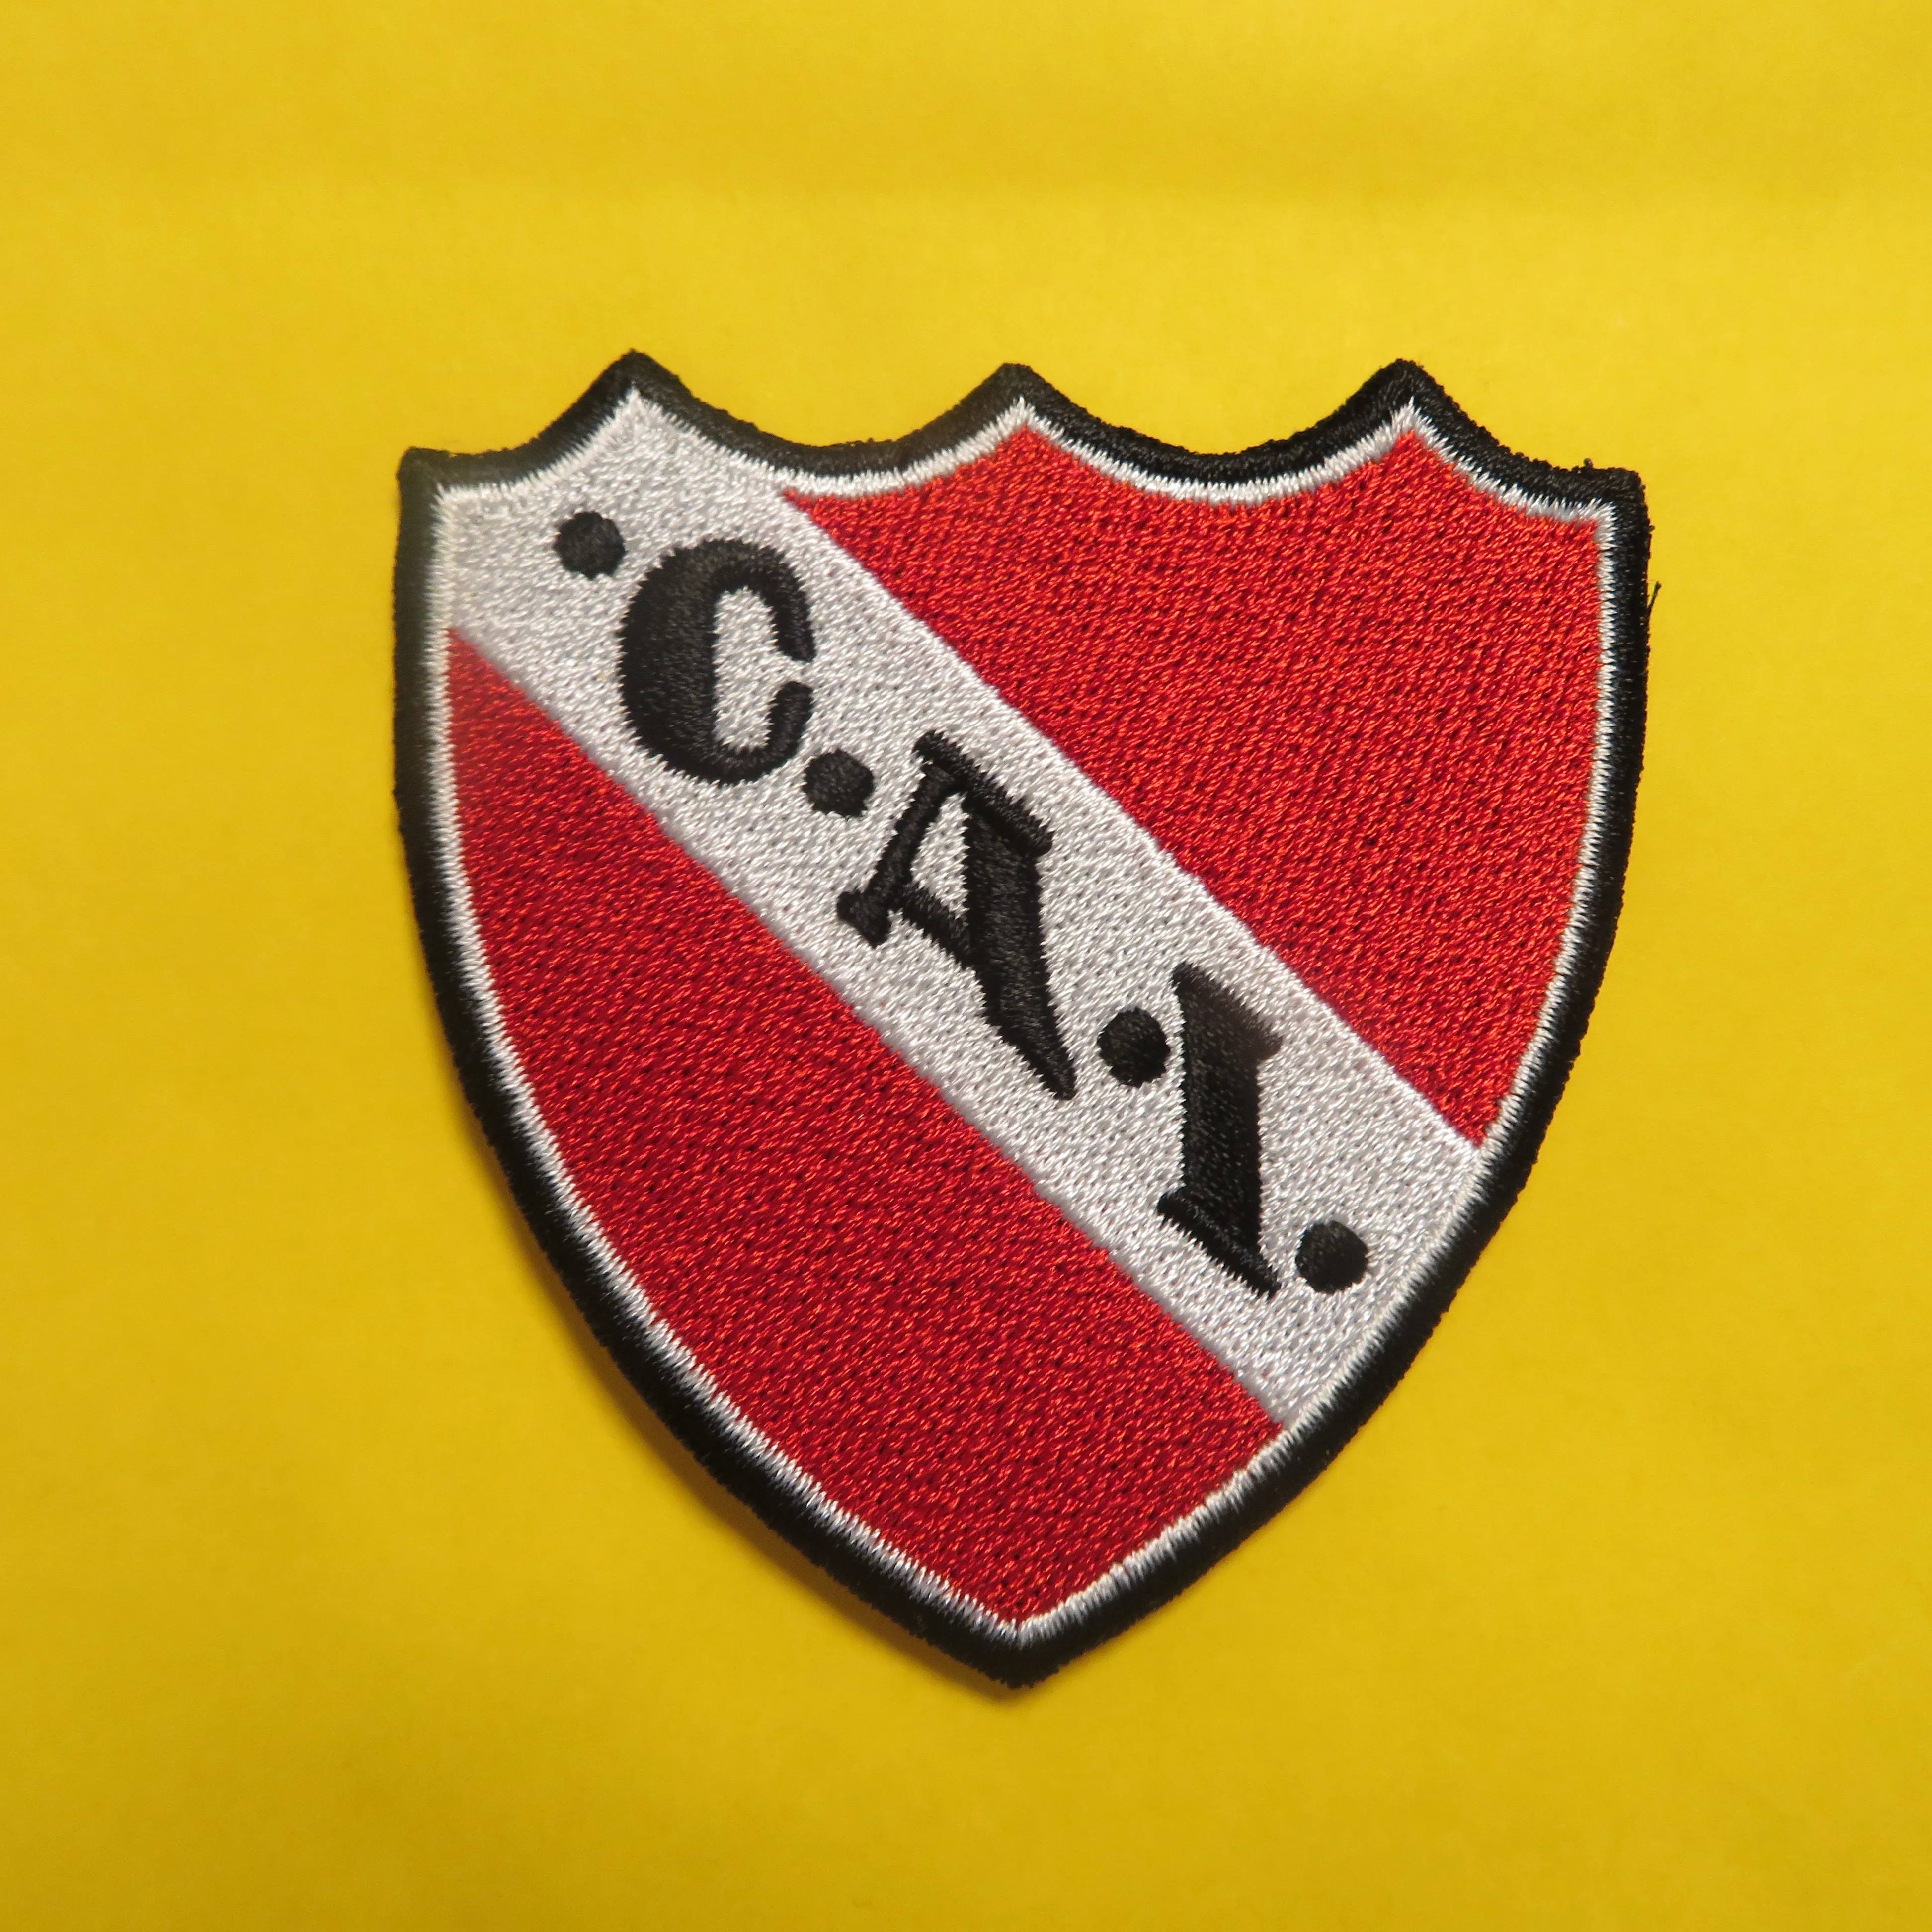 Aufnäher Fußball Football soccer club Hotspurfc patch Bügelbild badge iron on 